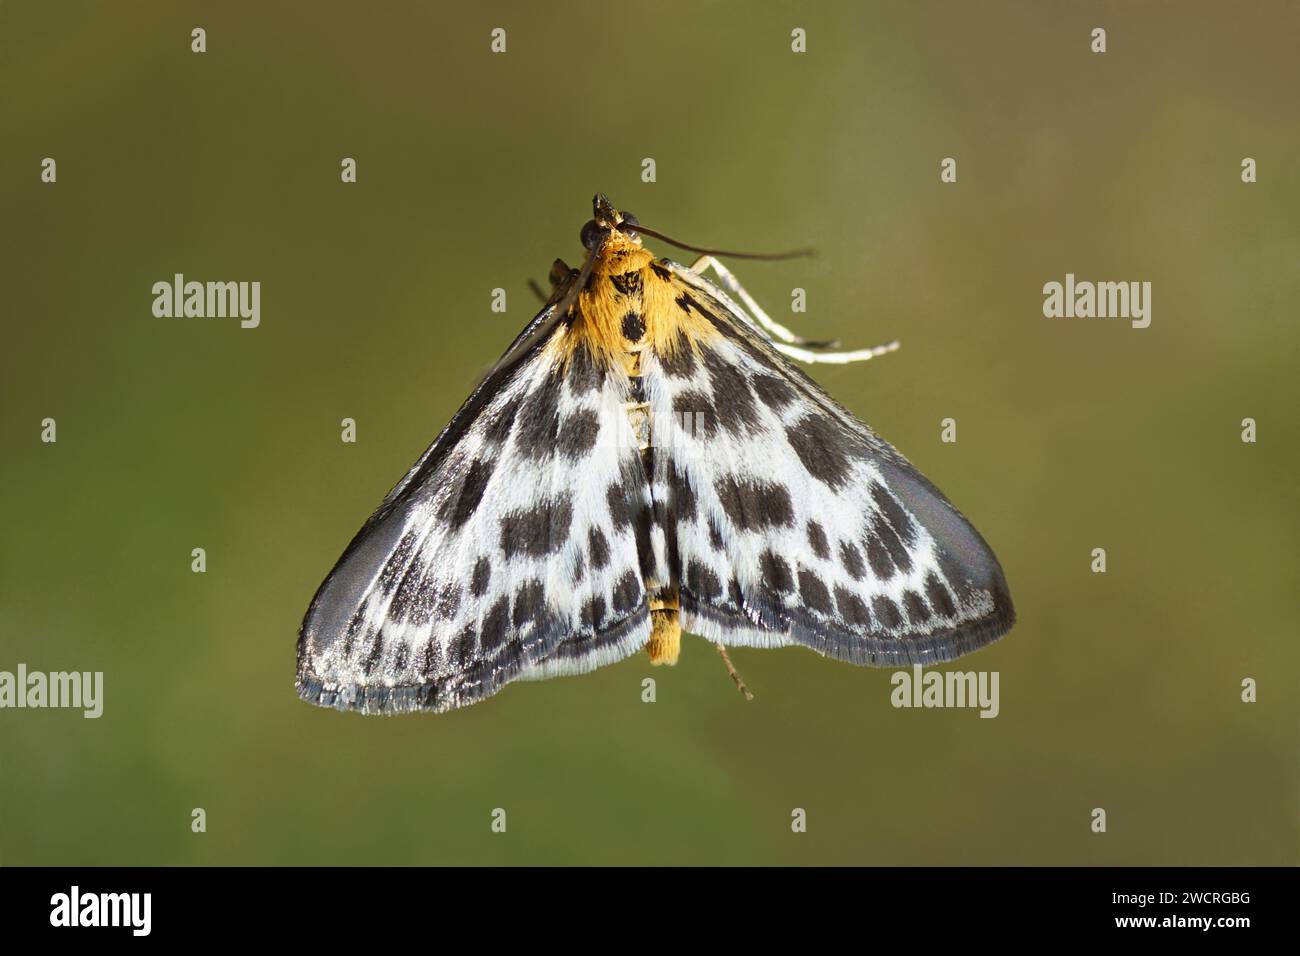 Small Magpie (Anania hortulata, formely Eurrhypara hortulata). Subfamily Pyraustinae. Family grass moths (Crambidae). On glass, blurred green garden. Stock Photo